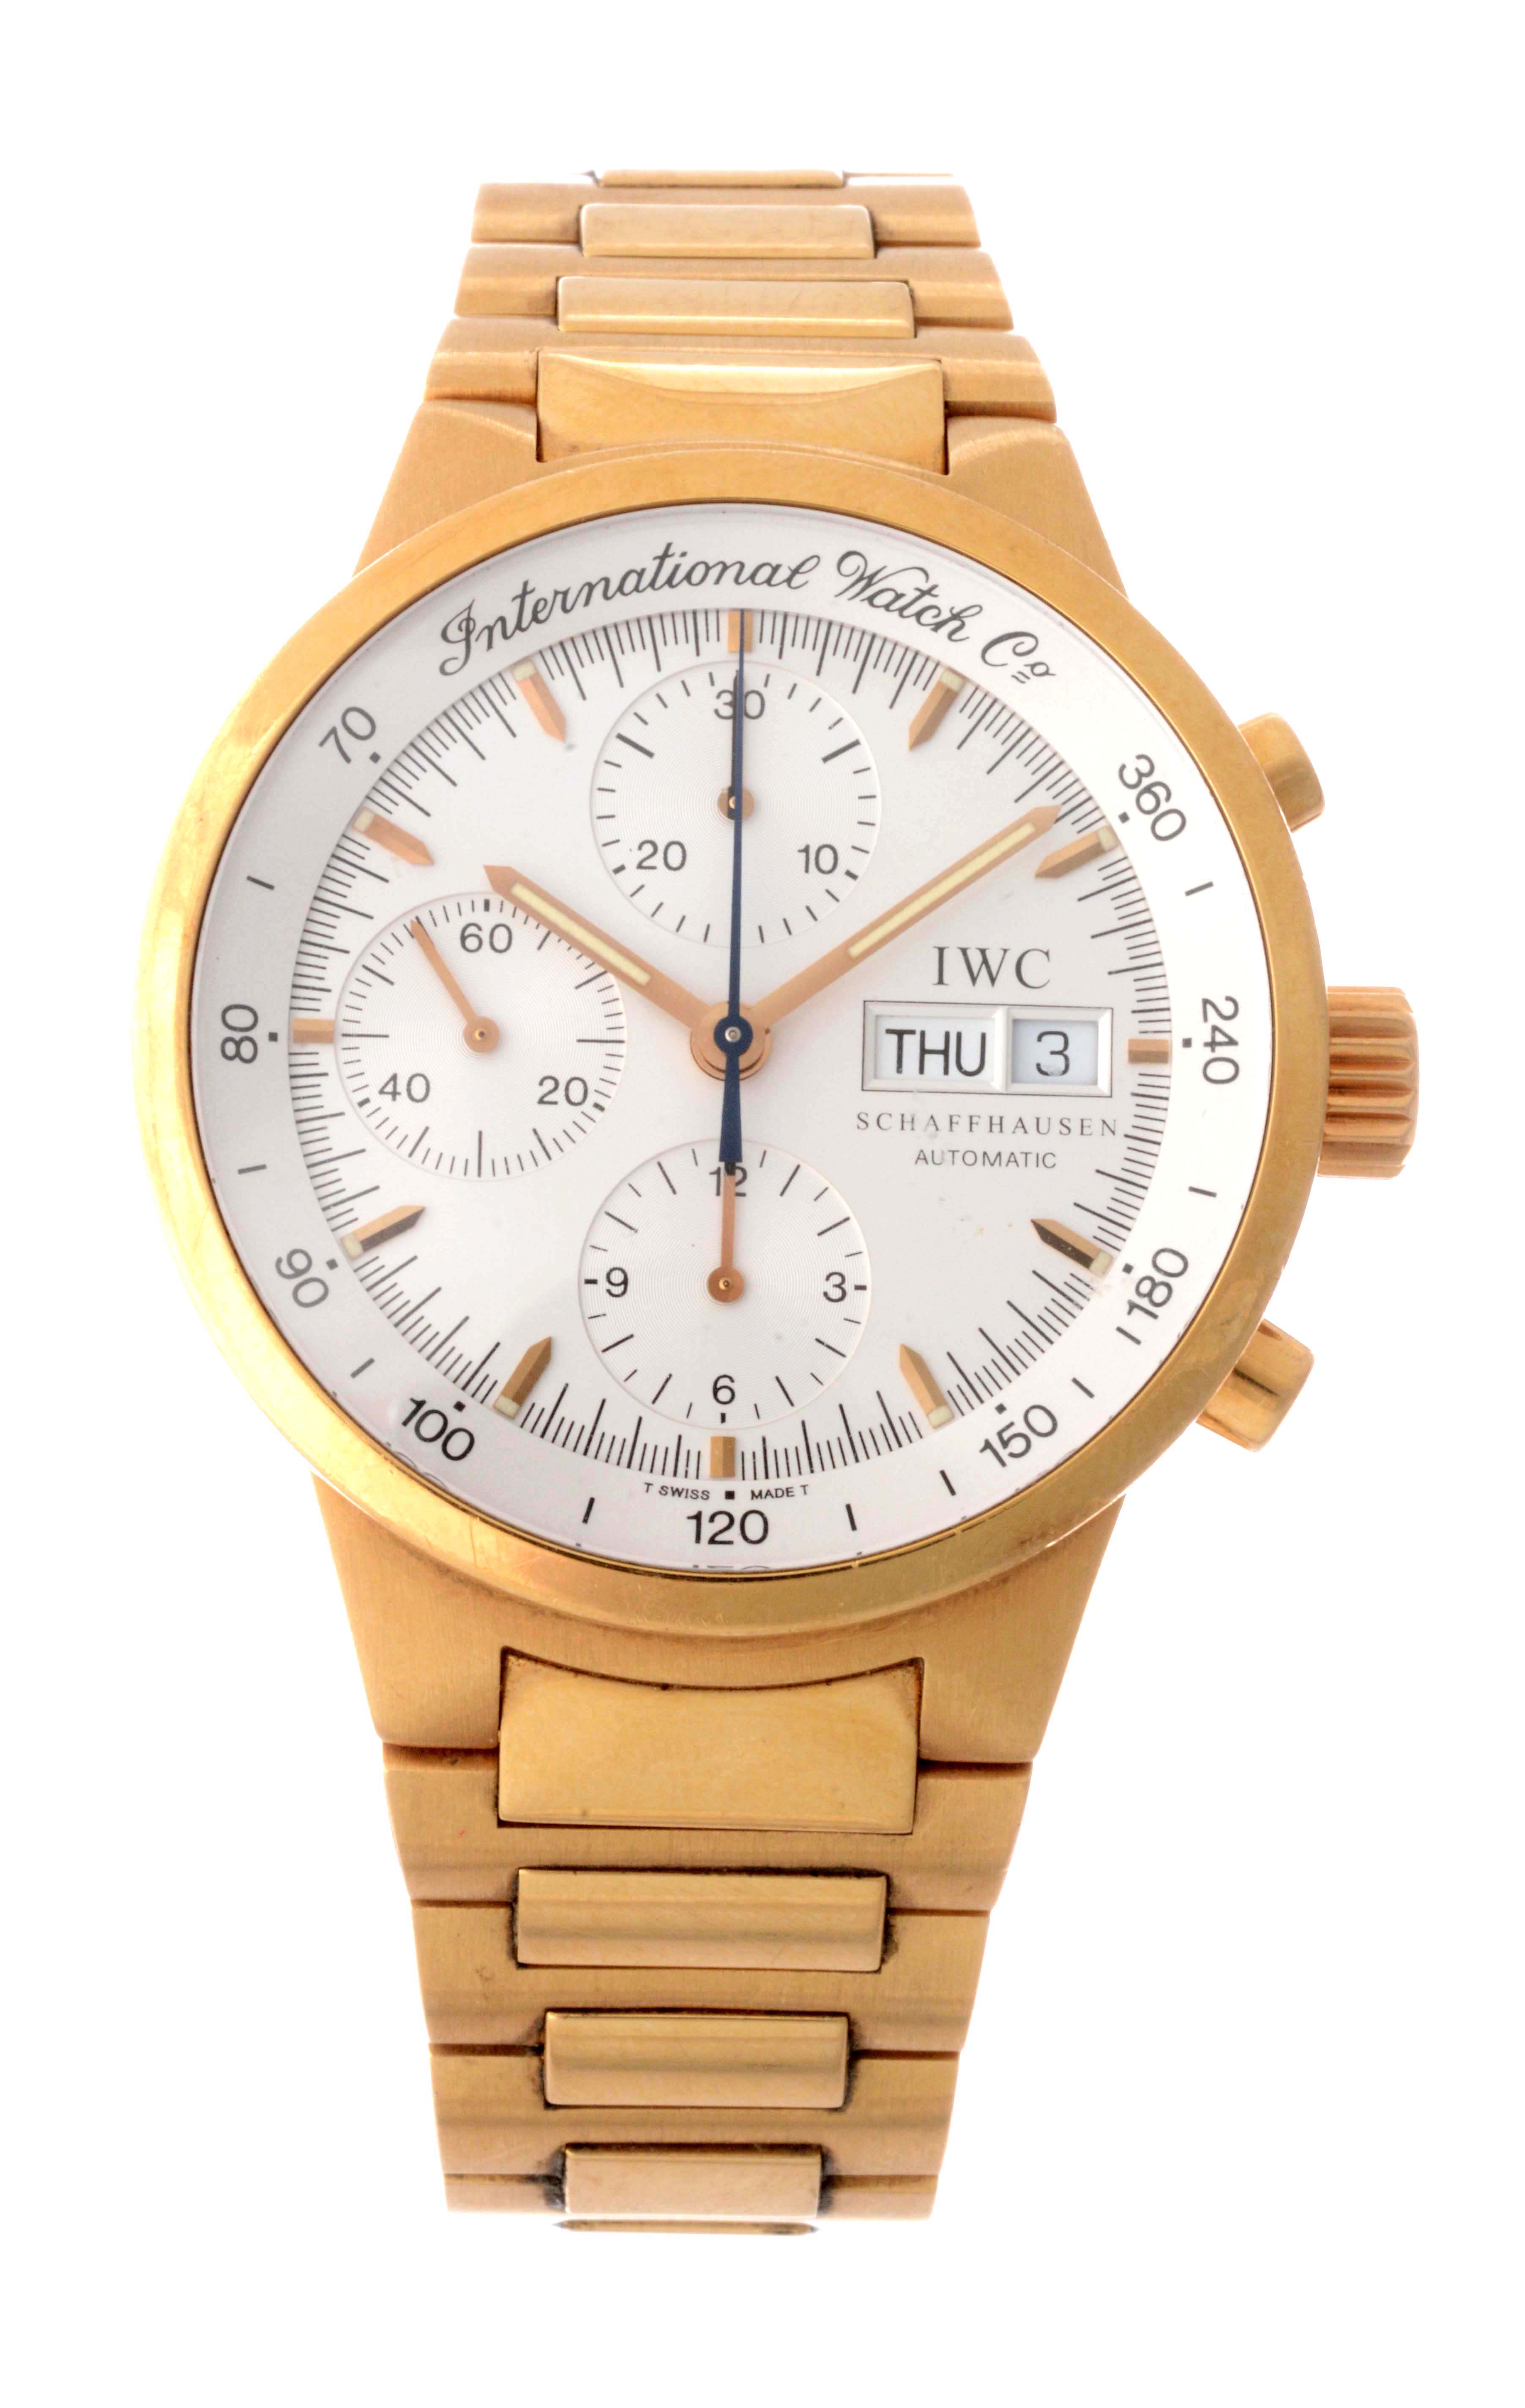 IWC 18k Chronograph Wristwatch Model # 9277, estimated at $10,000-15,000.